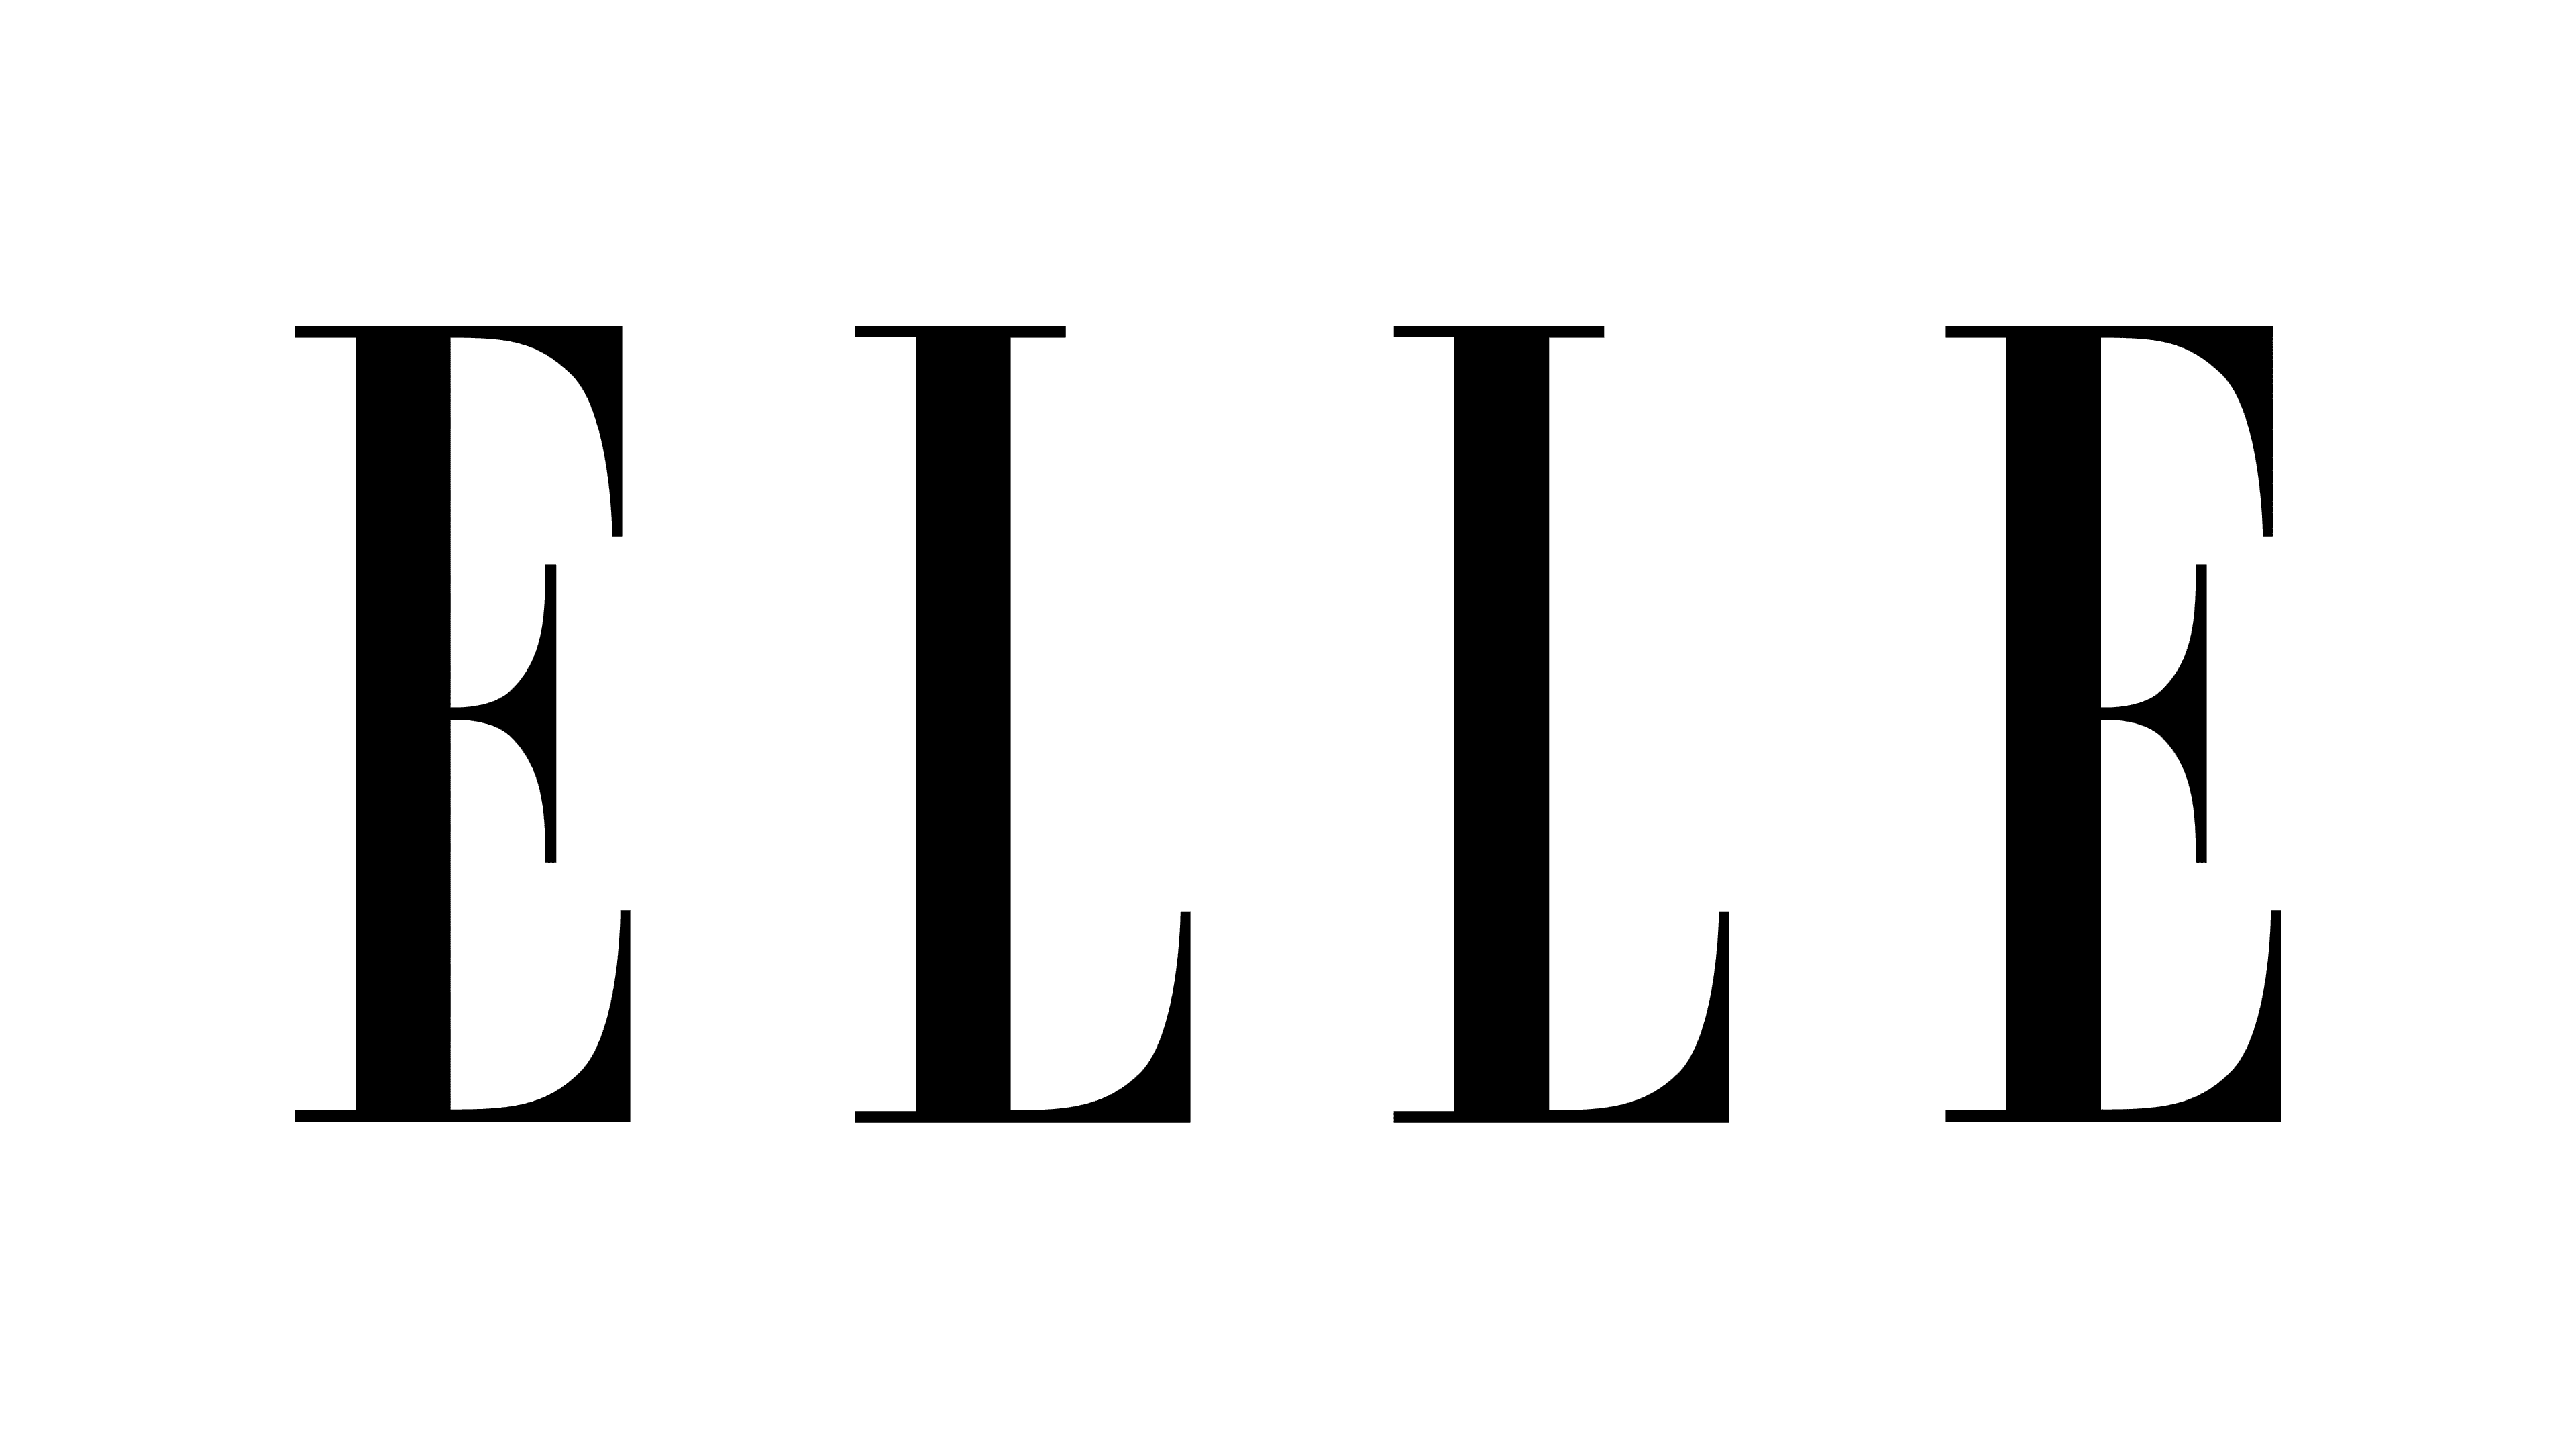 Logotipo de la revista ELLE, en el que se ven las letras del nombre, es decir, E, L, L, E